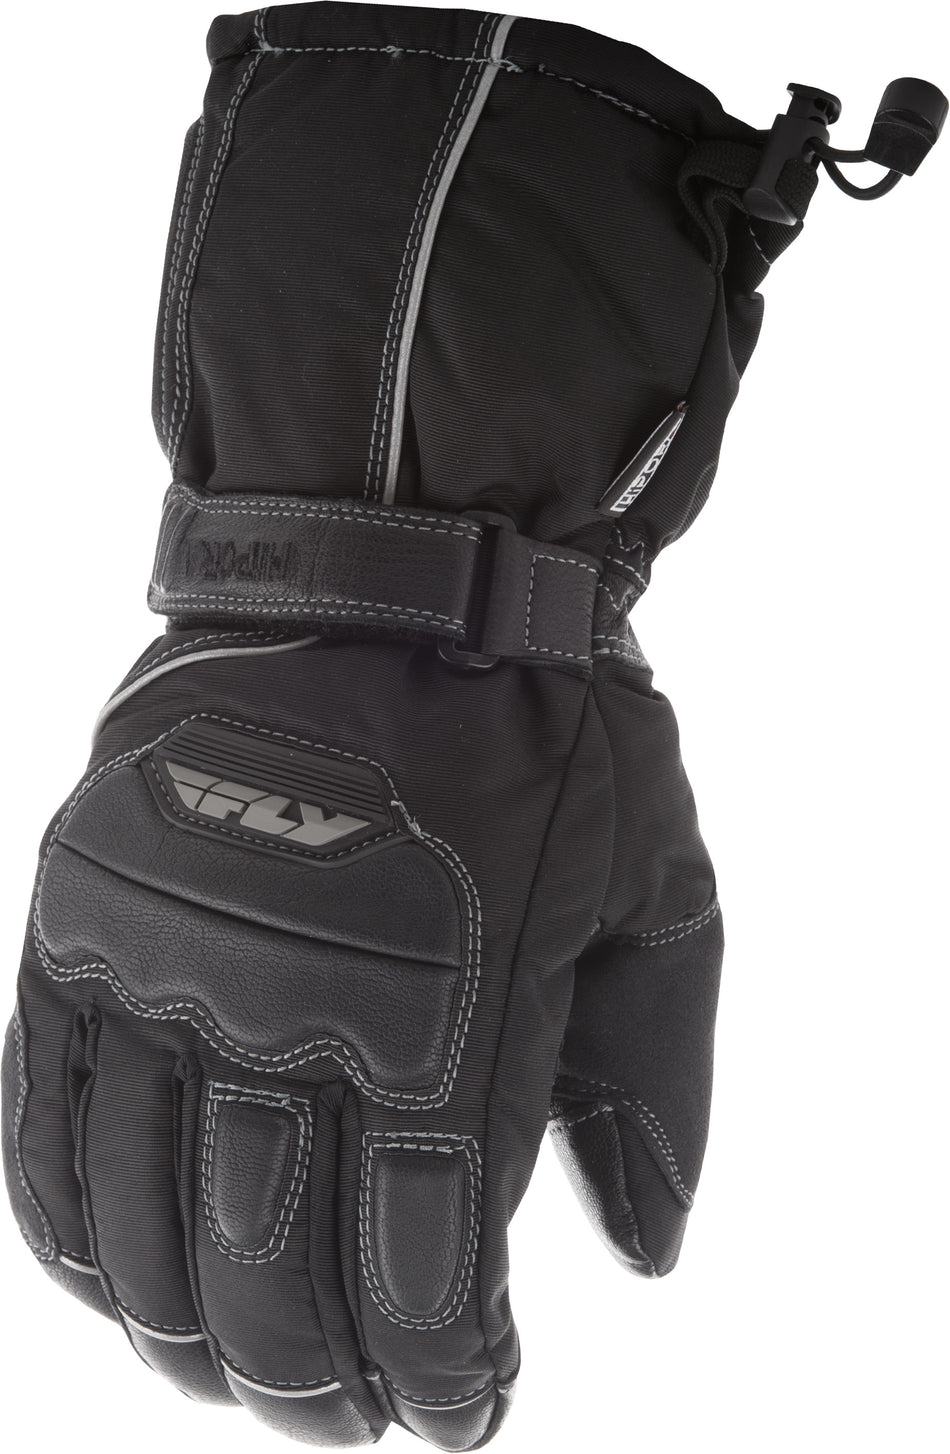 FLY RACING Aurora Gloves Black Xl 363-3891X